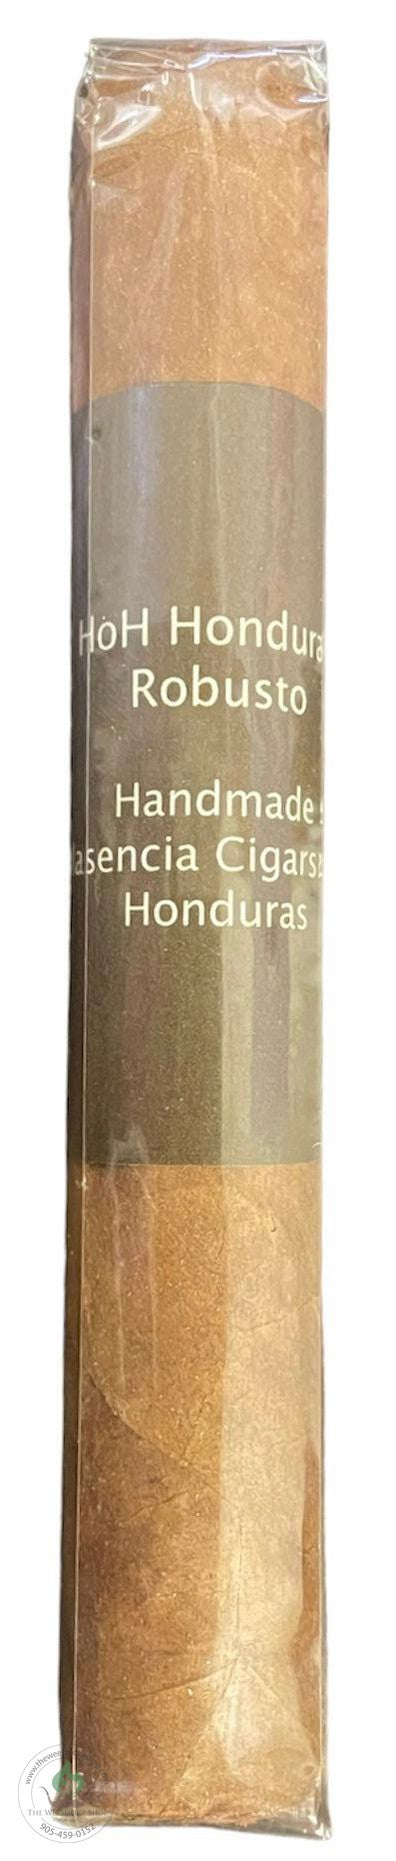 HoH - Honduran Robusto - The Wee Smoke Shop